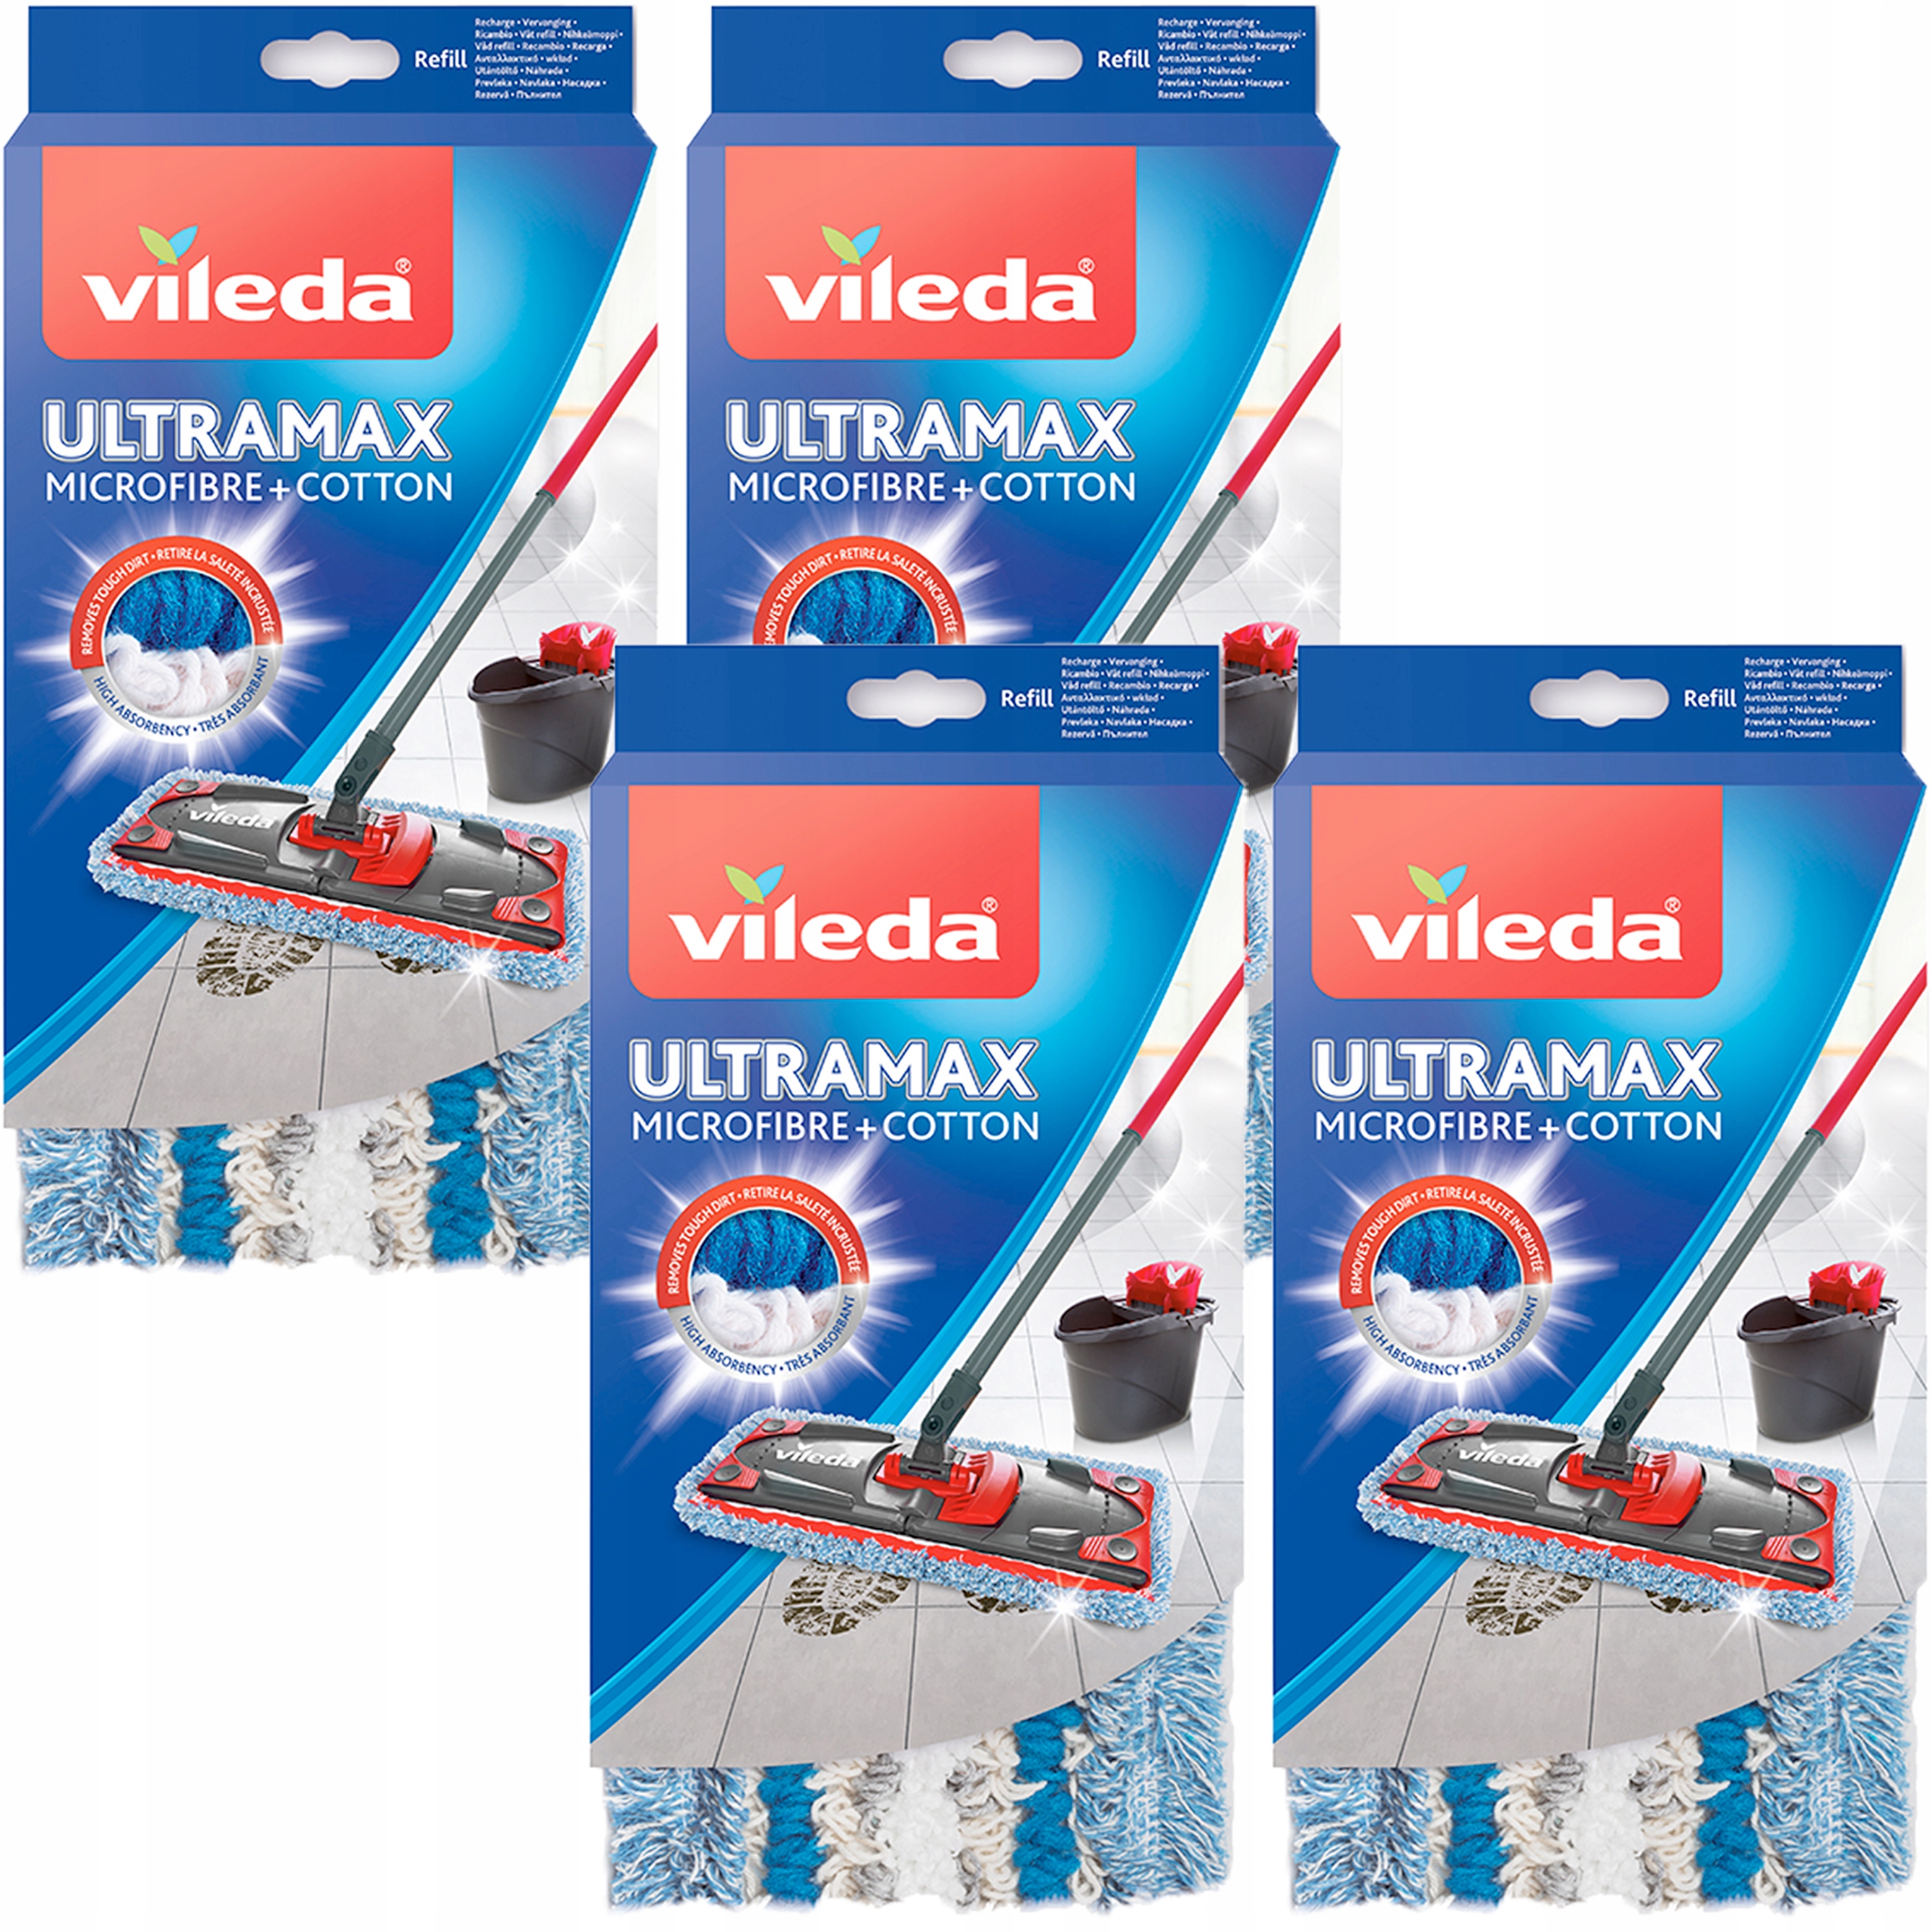 Recharge Ultramax VILEDA